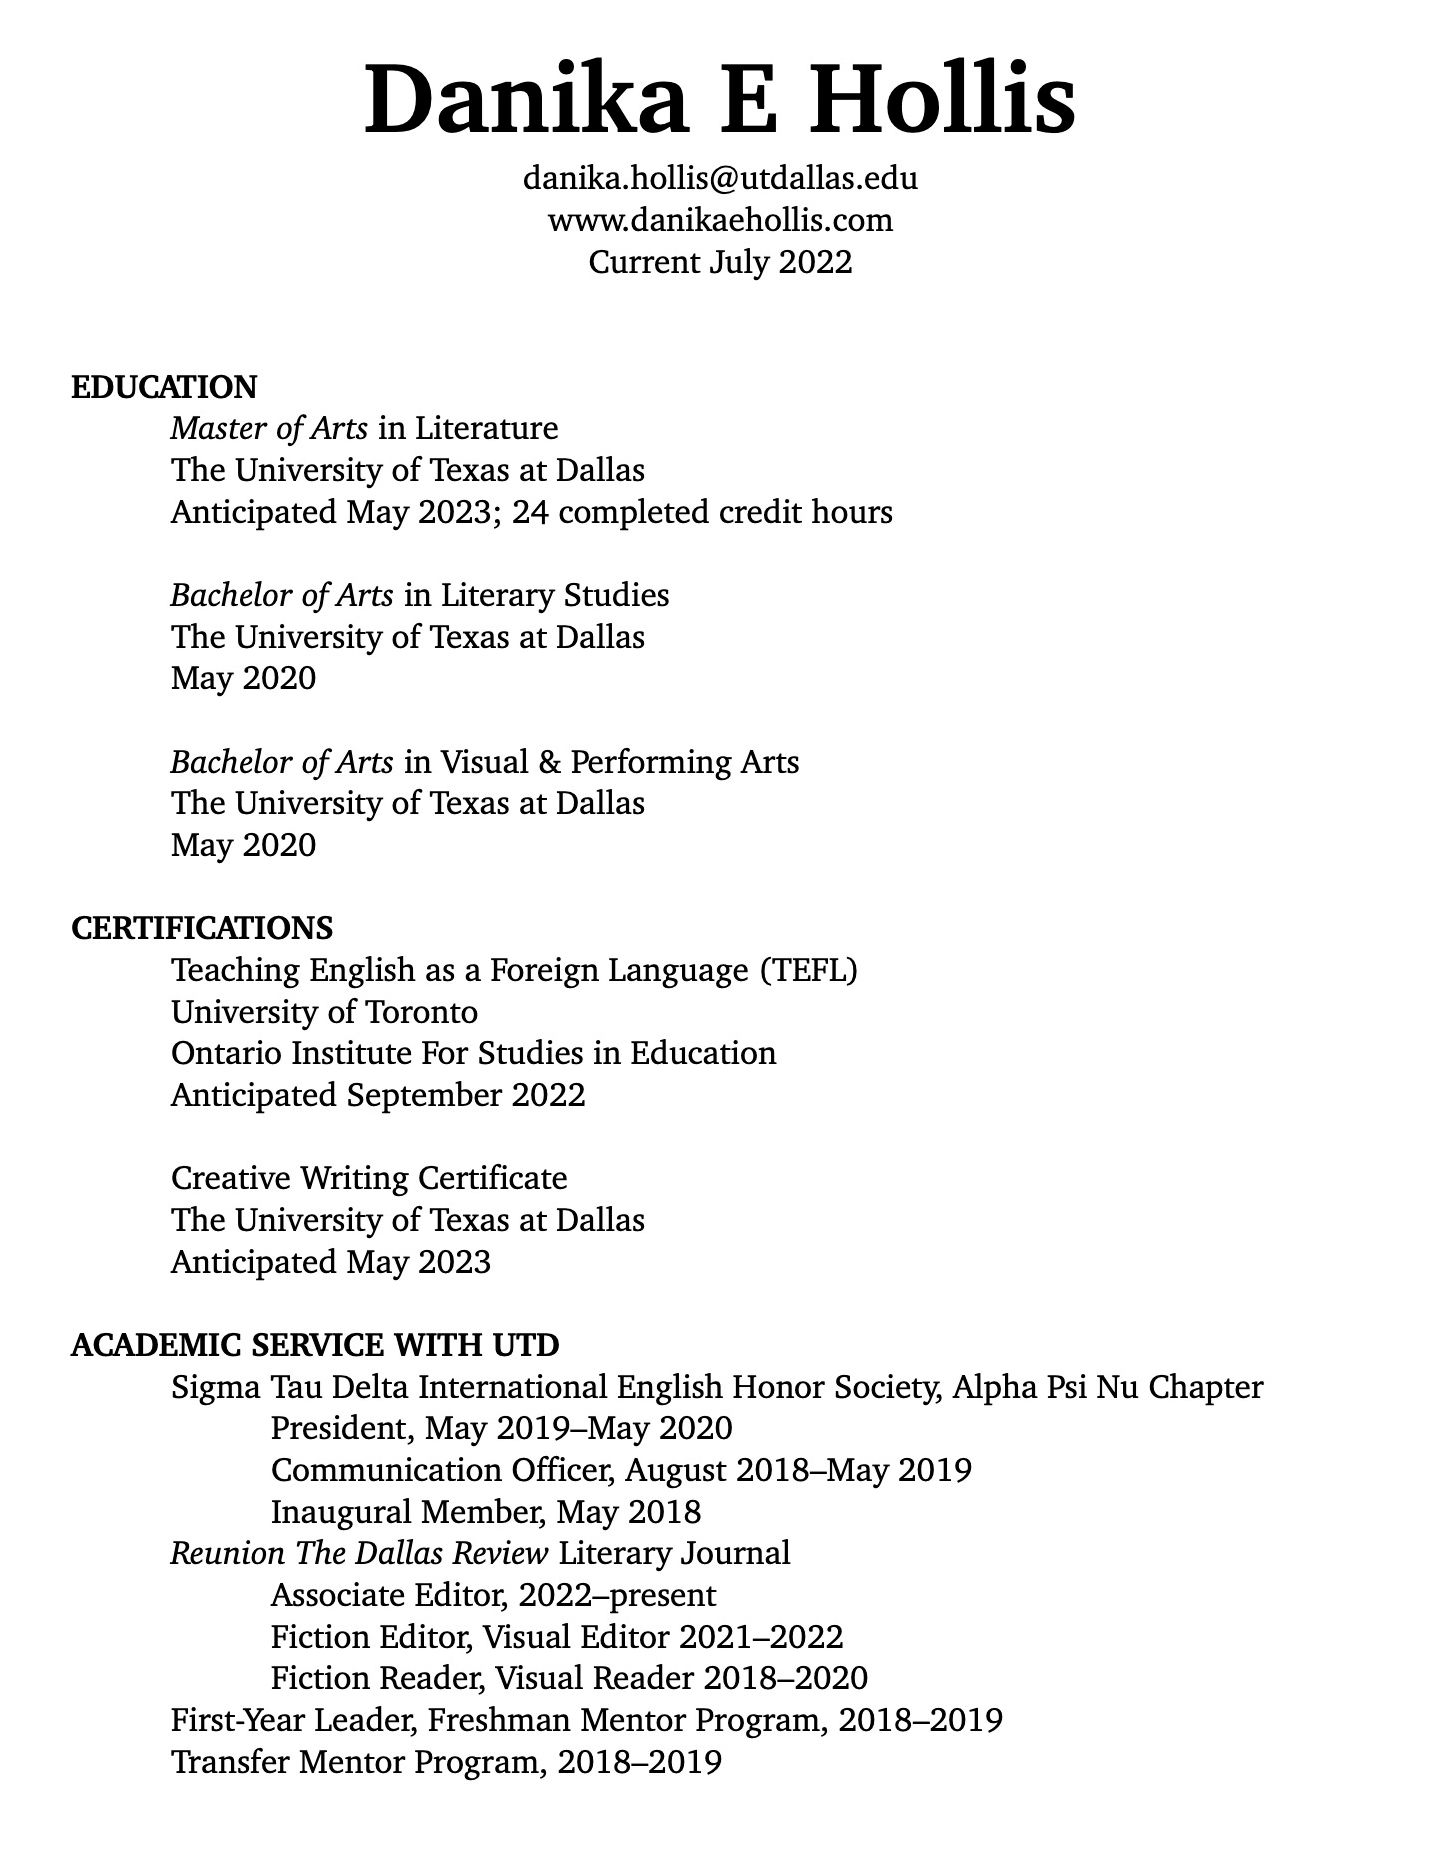 Danika E Hollis CV Education MA Literature UTD Bachelor Literary Studies Literature Certifications